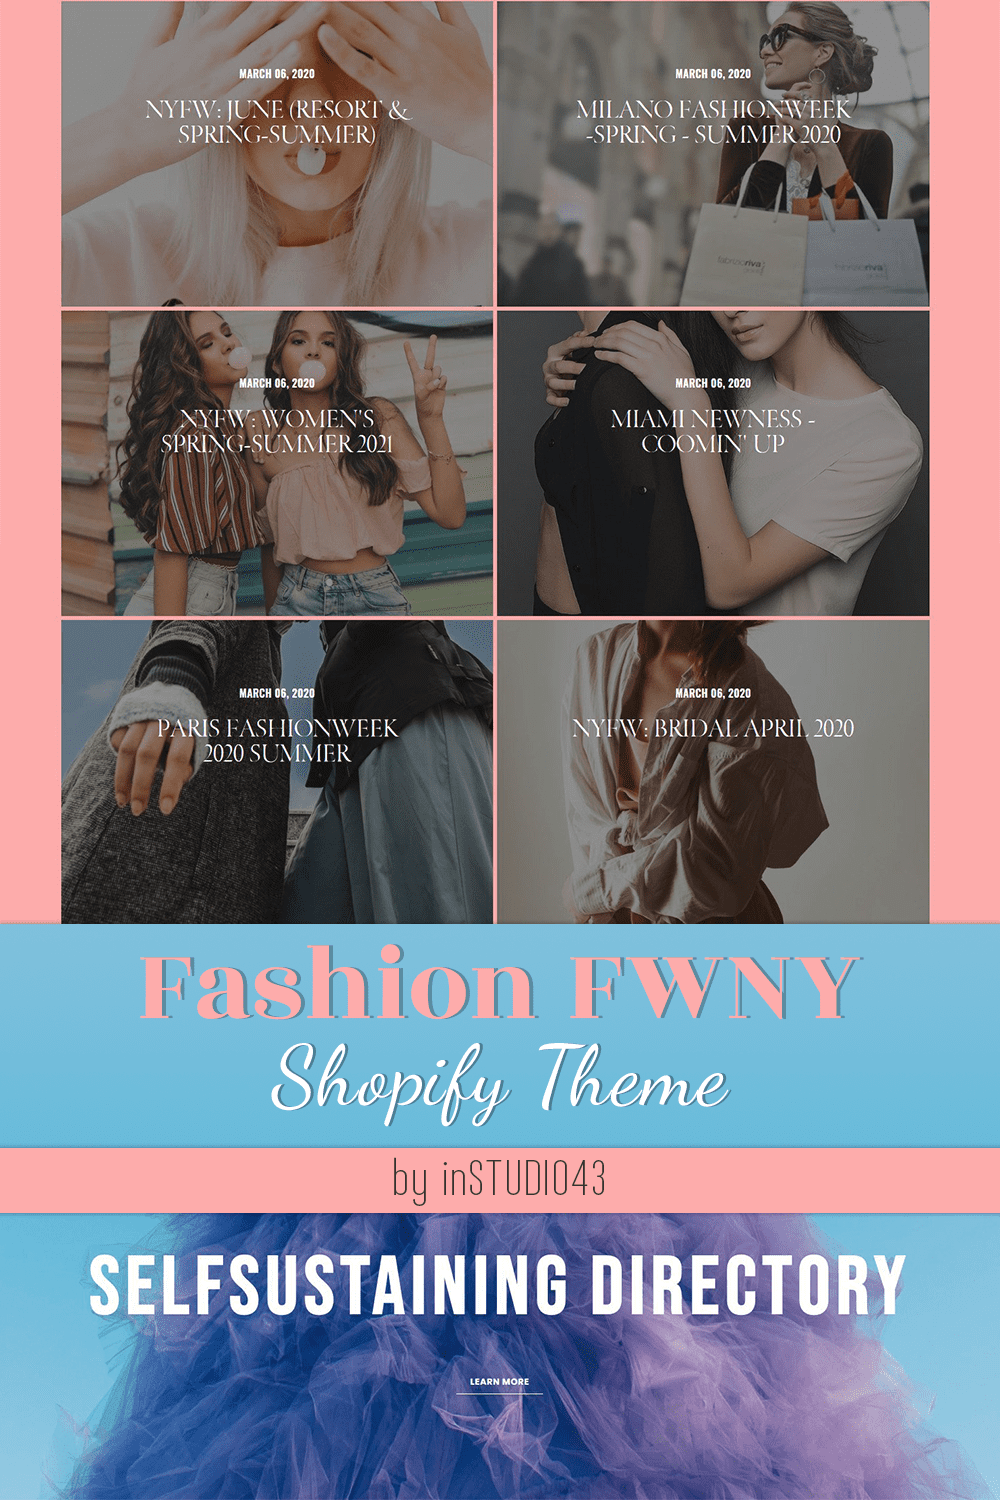 fashion fwny shopify theme pinterest 251